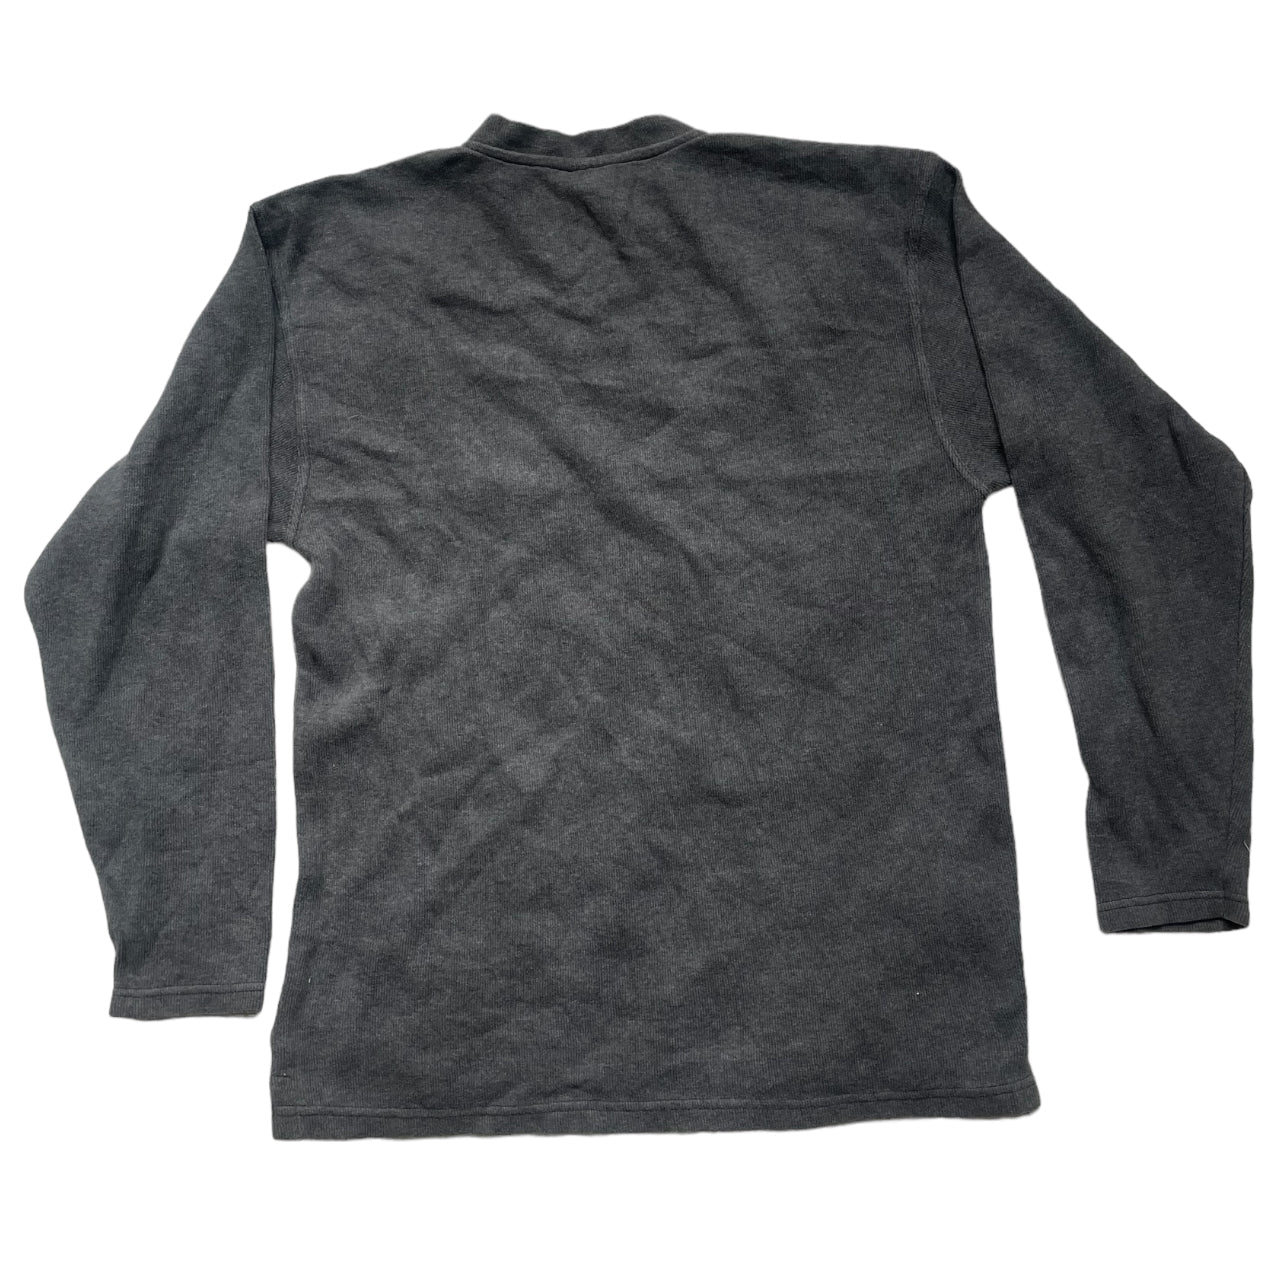 Nike Vintage Sweatshirt V Neck 90s L Size Grey A_34